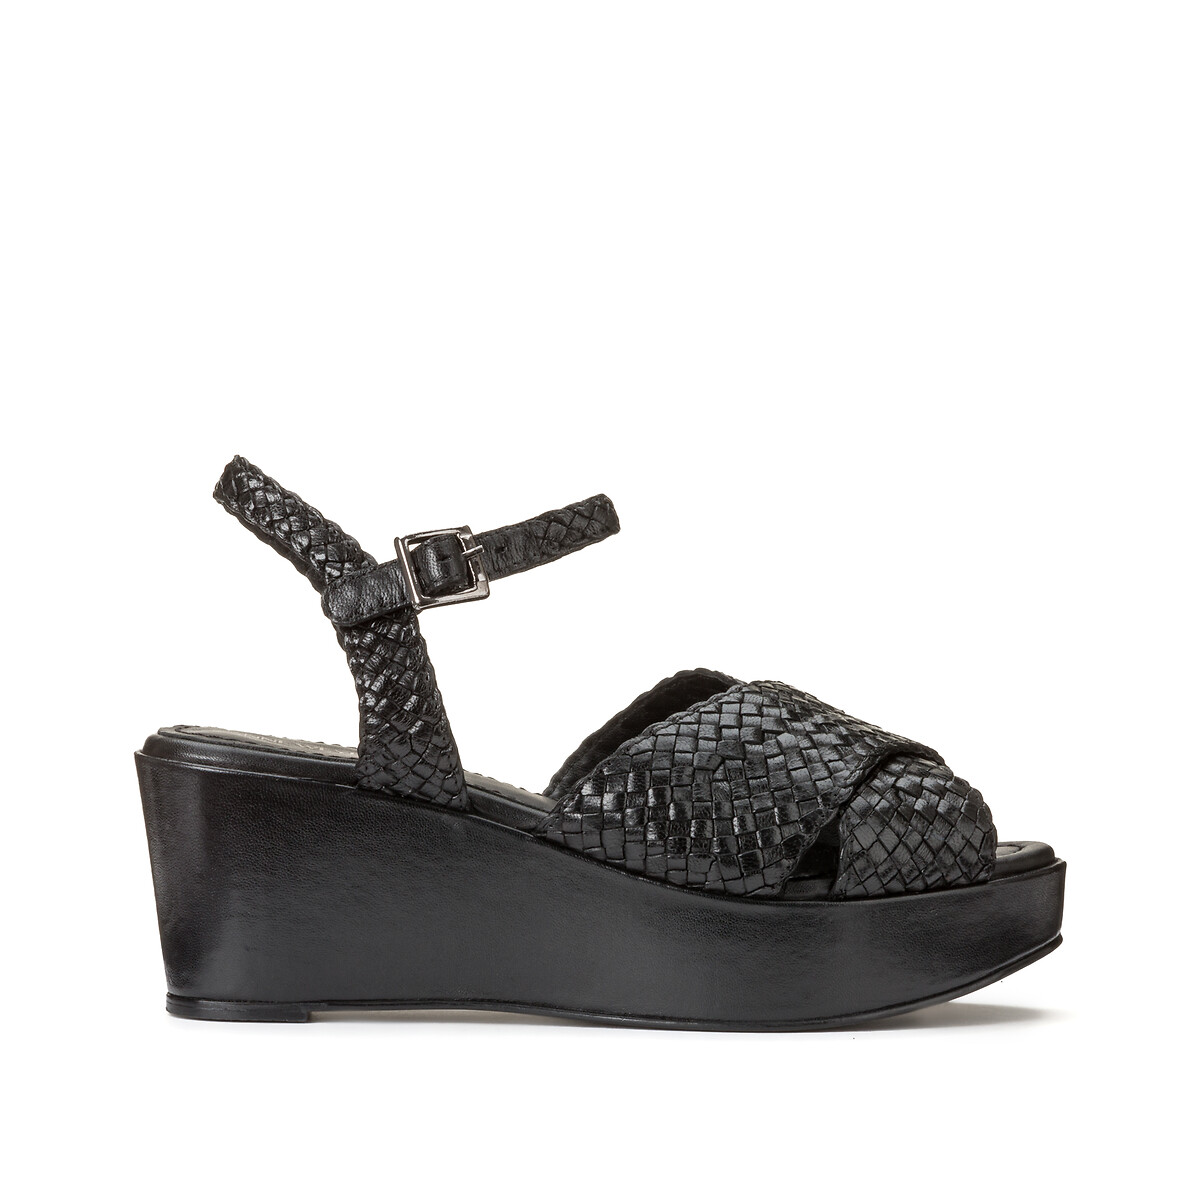 Sandal, casual black wedge sandal